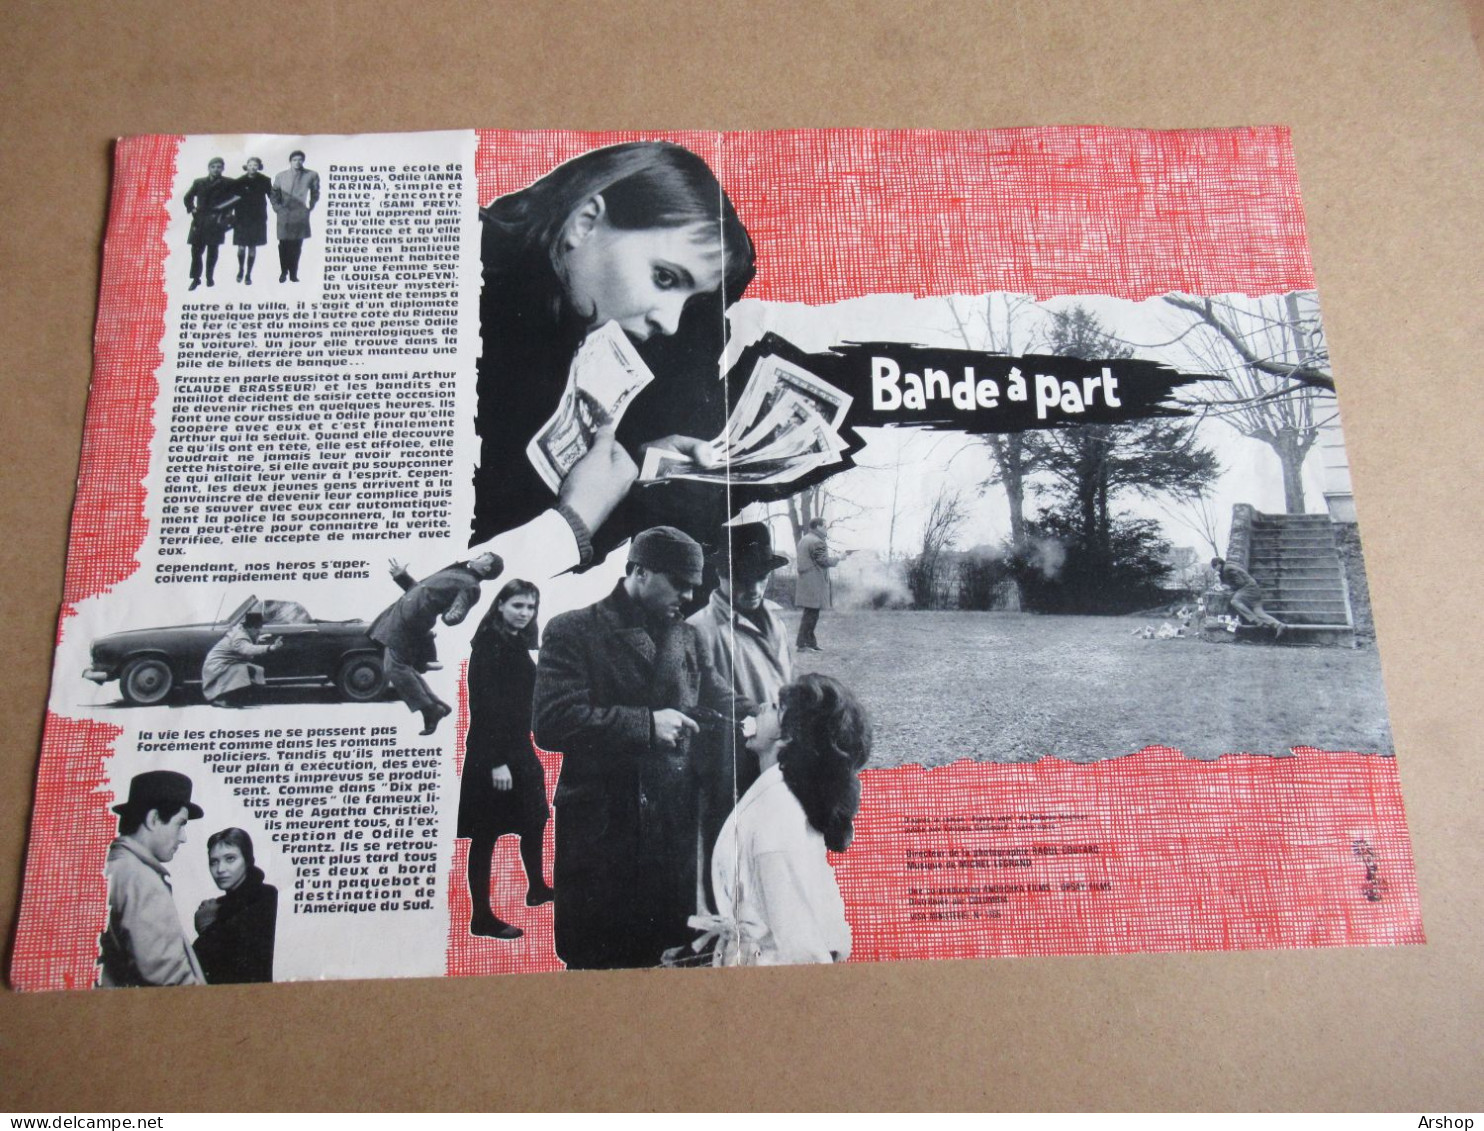 BANDE A PART De JEAN LUC GODARD Avec ANNA KARINA / SAMI FREY / CLAUDE BRASSEUR - PLAQUETTE SYNOPSIS Original 1964 Déplia - Werbetrailer